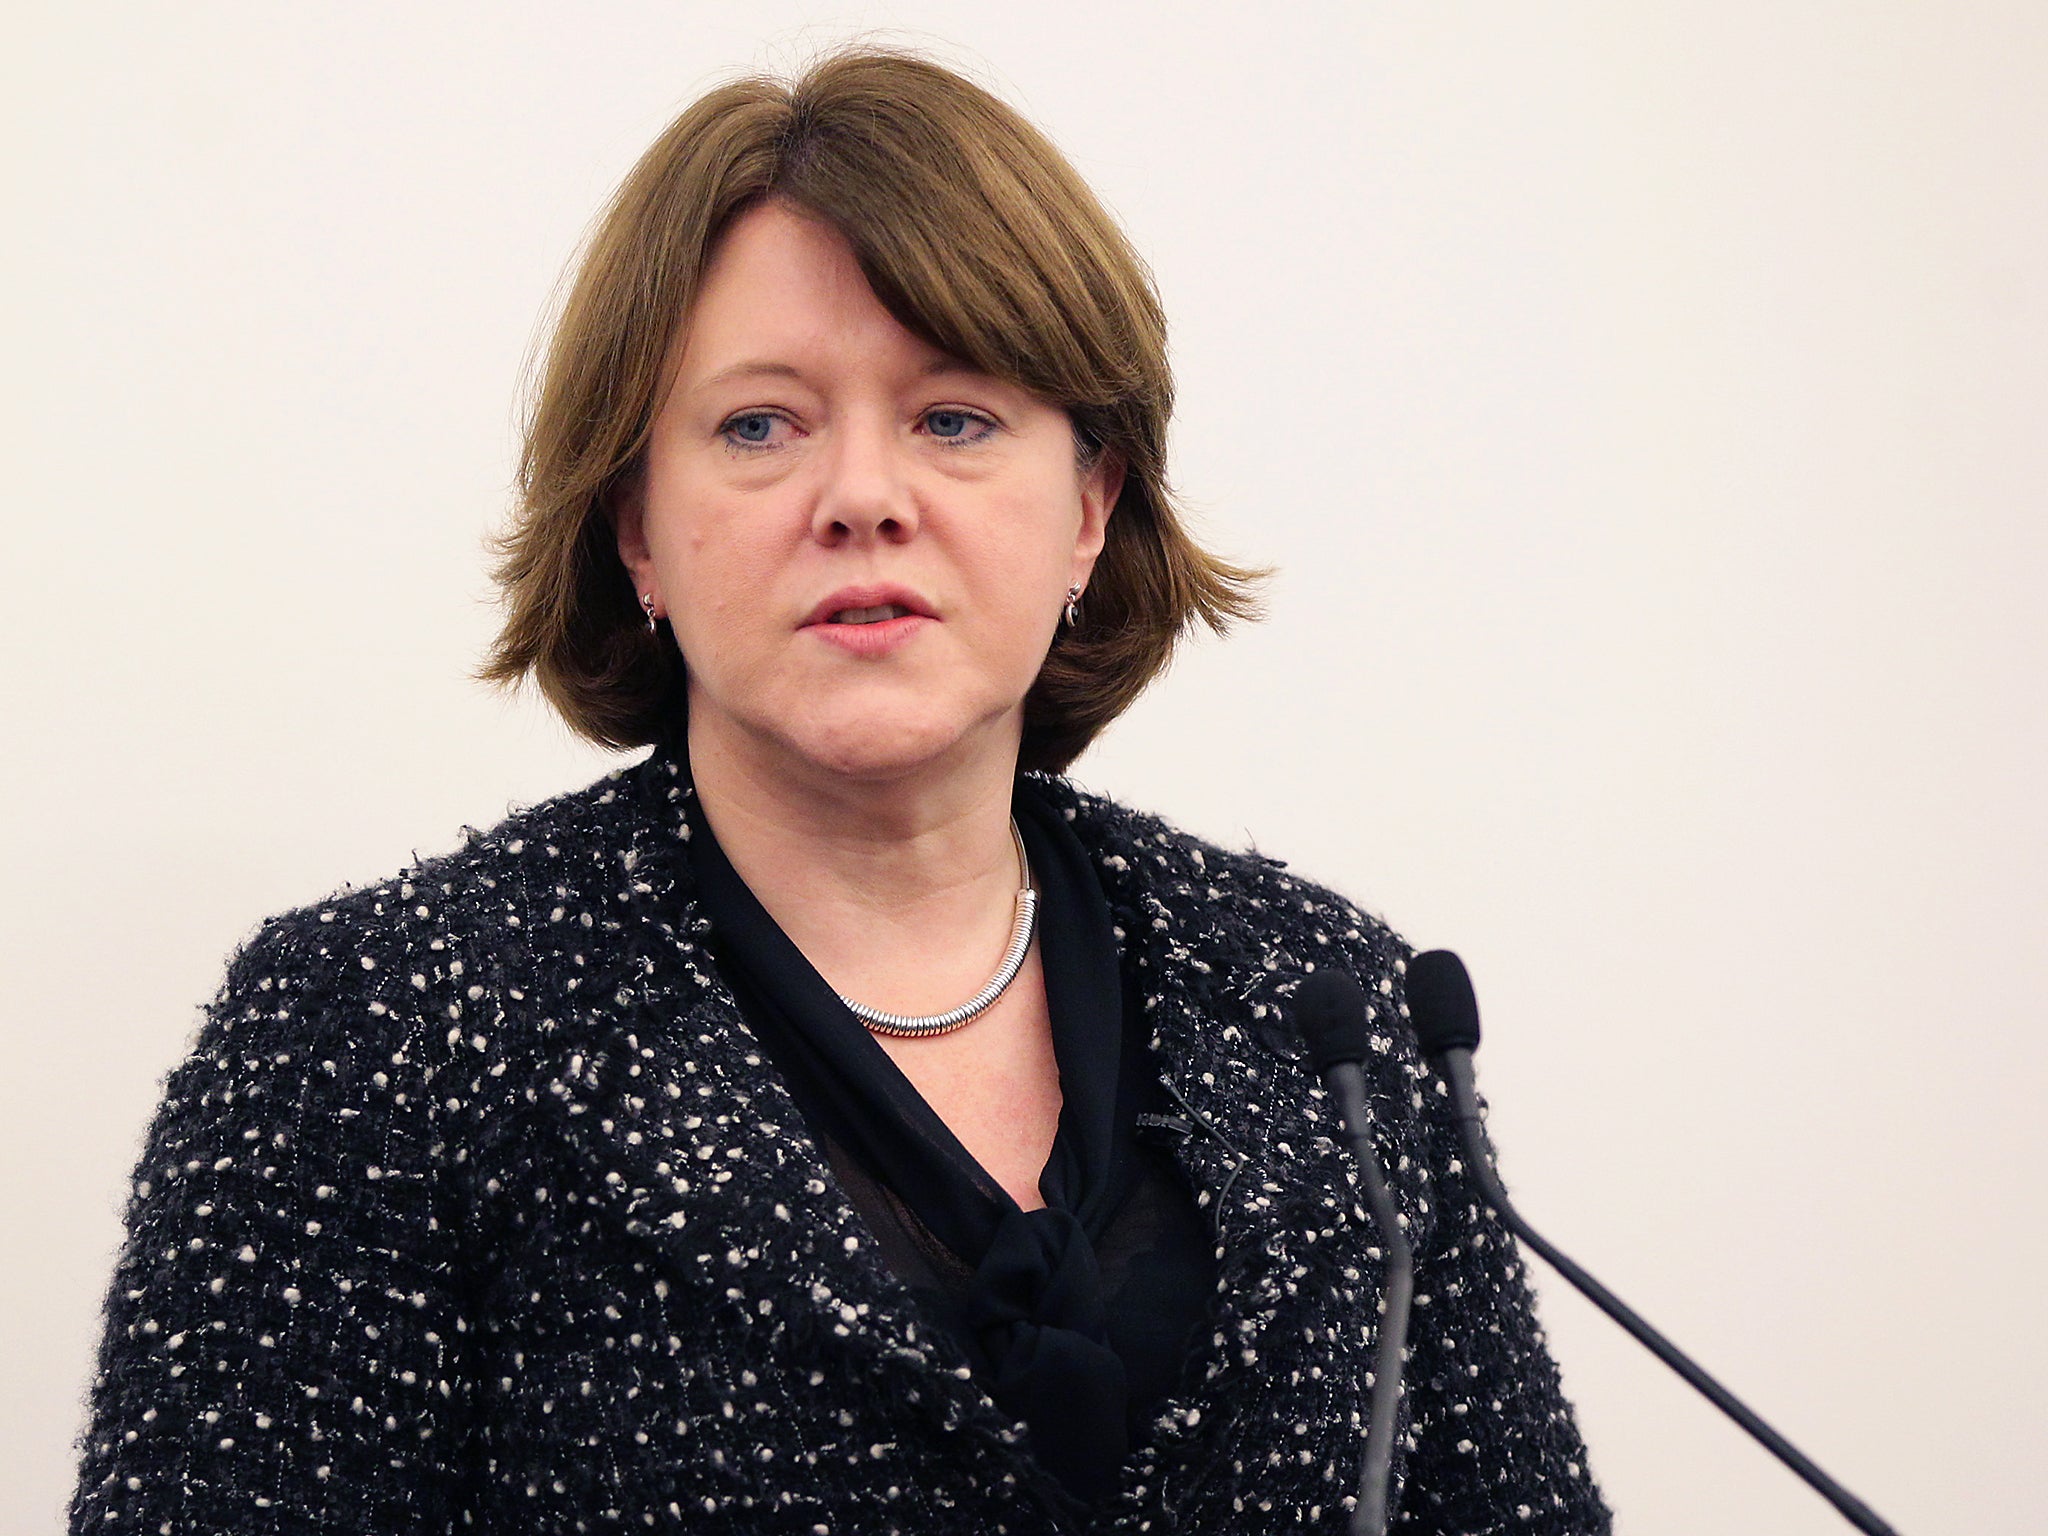 Maria Miller MP said 'negative cultural assumptions about gender roles persist'